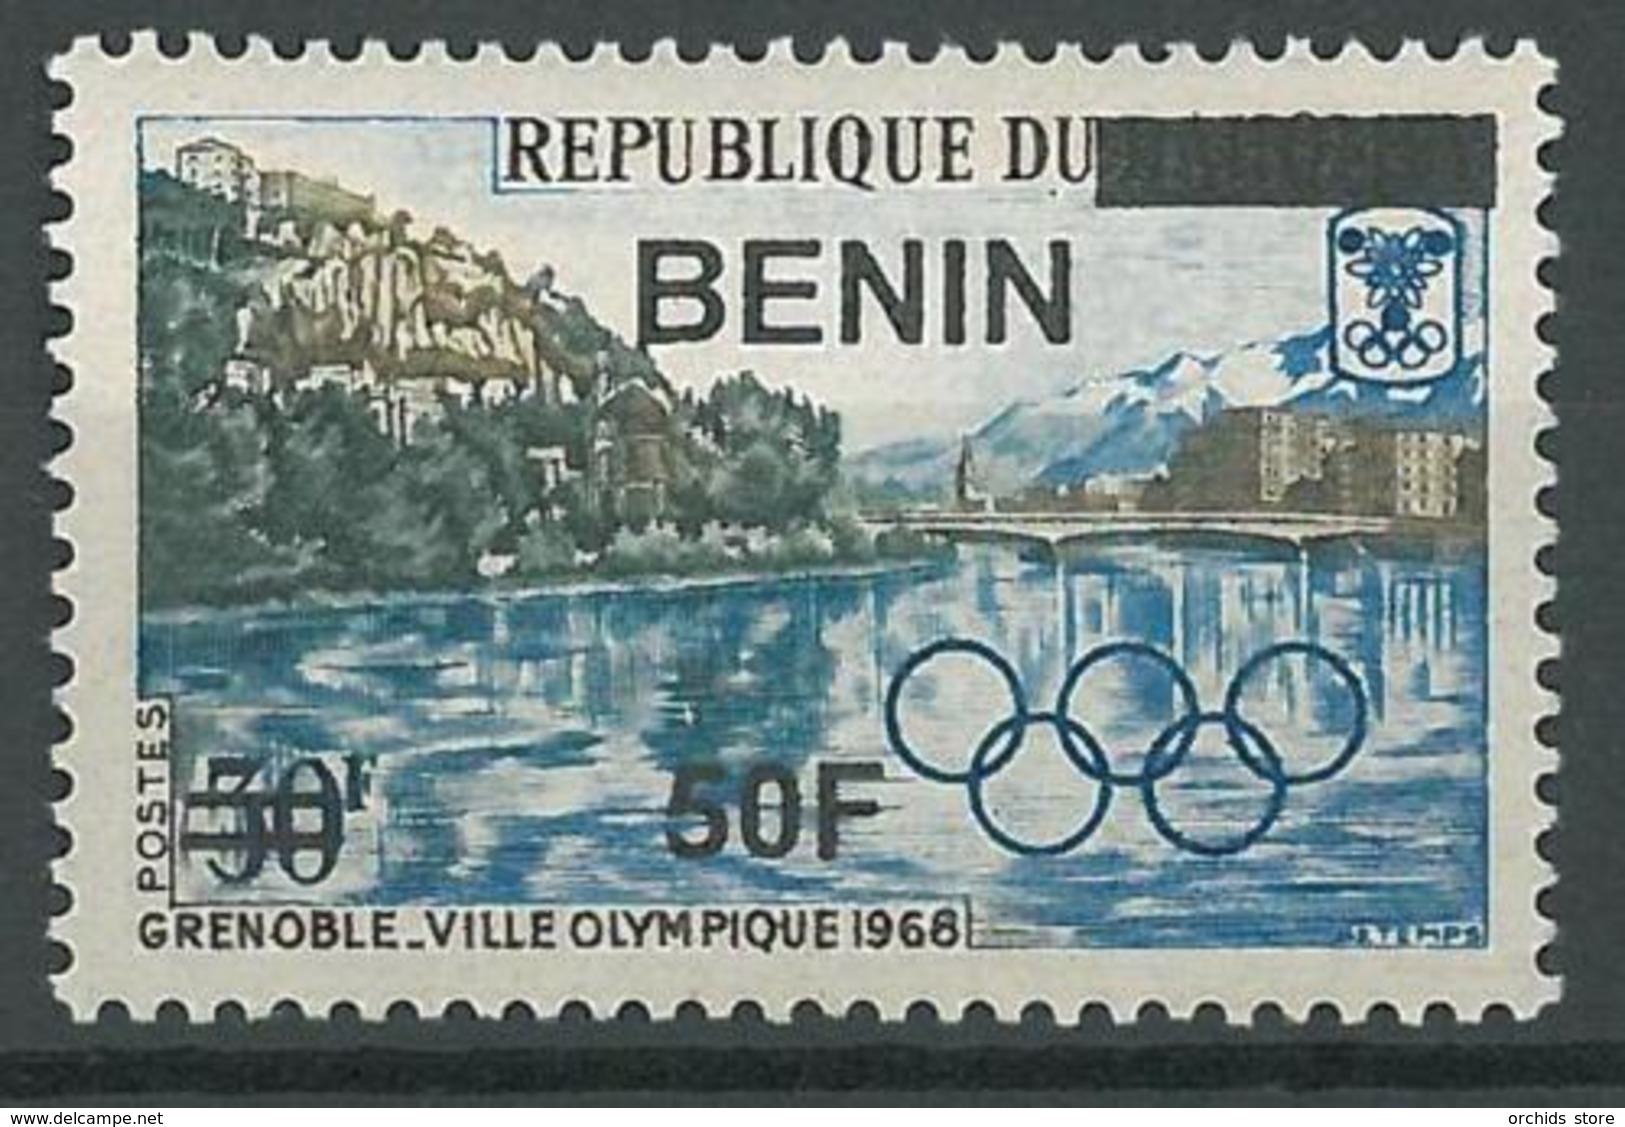 Benin 2009 MNH - Grenoble Olympics 1969 Ovptd 50F - Cv 35$ - Benin - Dahomey (1960-...)